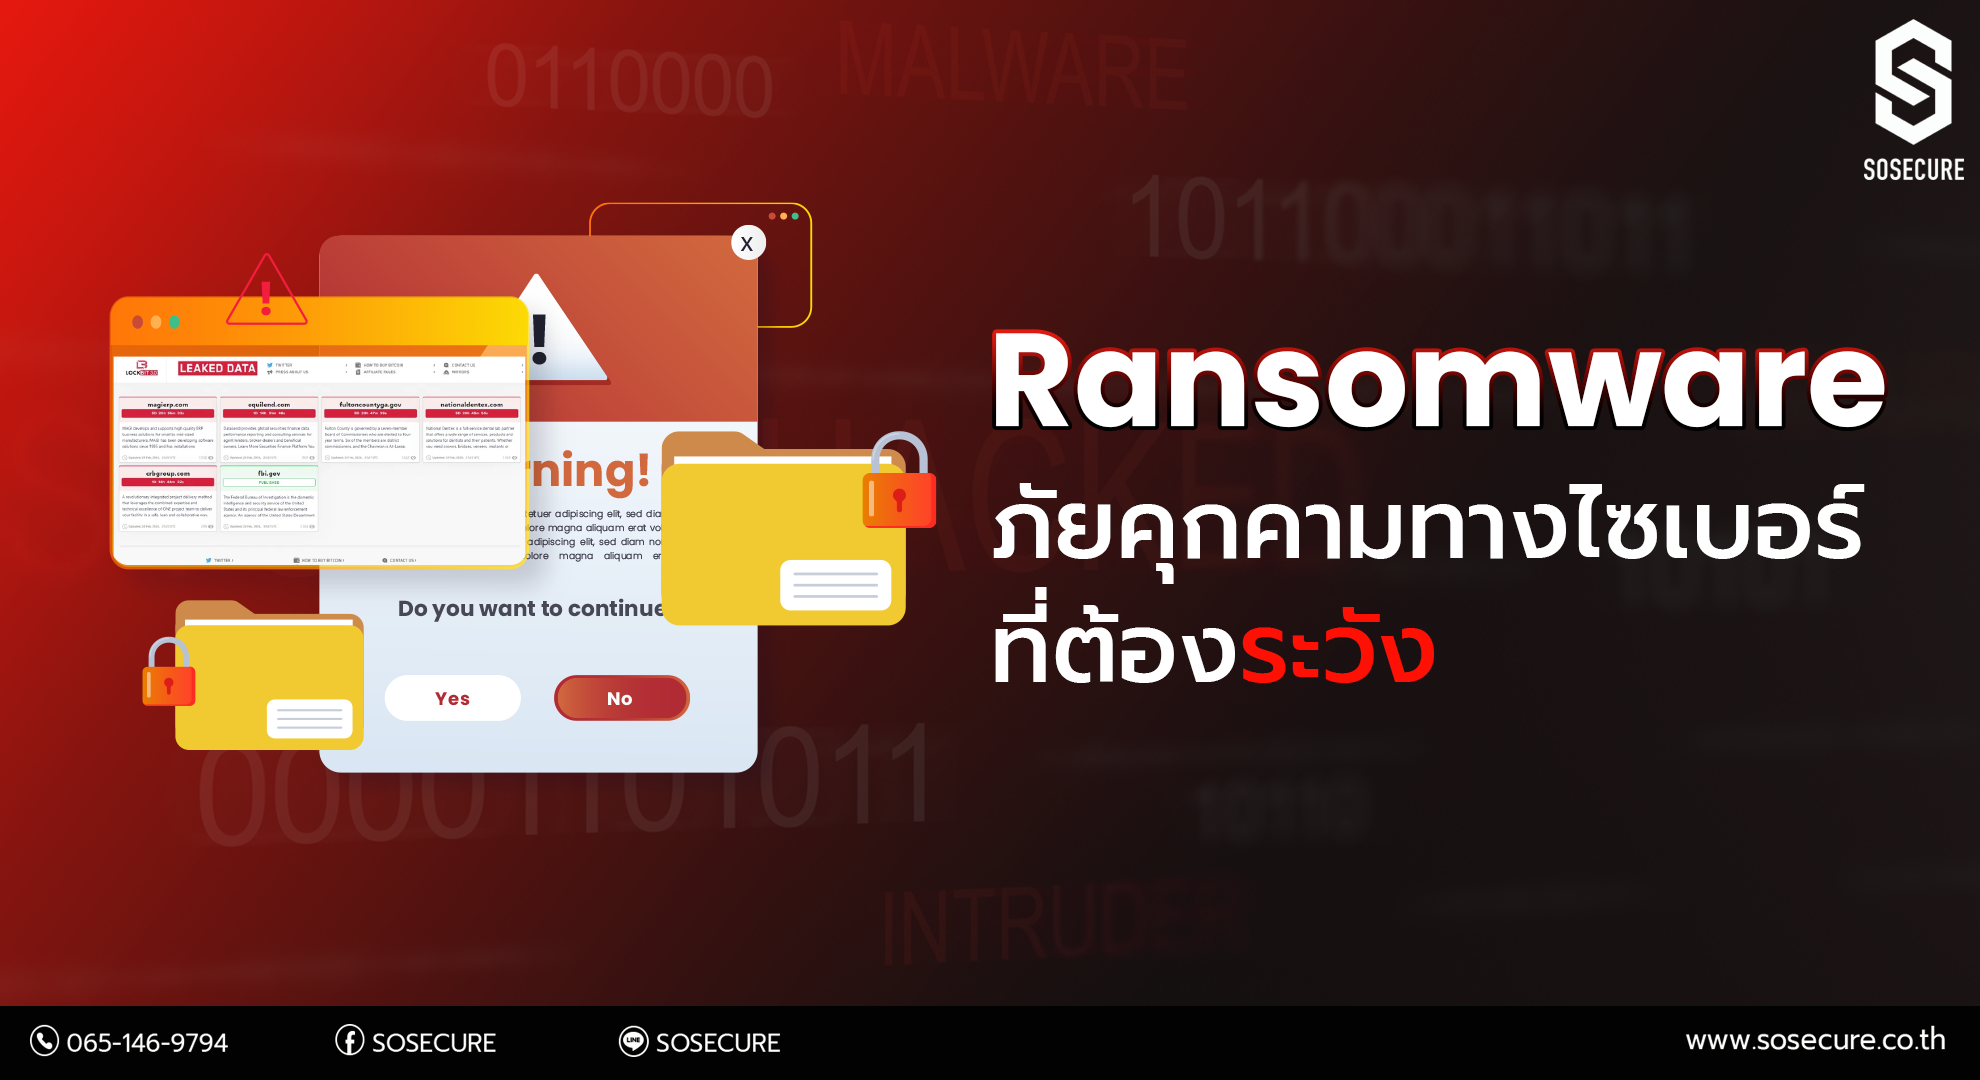 Ransomware คือภัยคุกคามที่ต้องระวัง